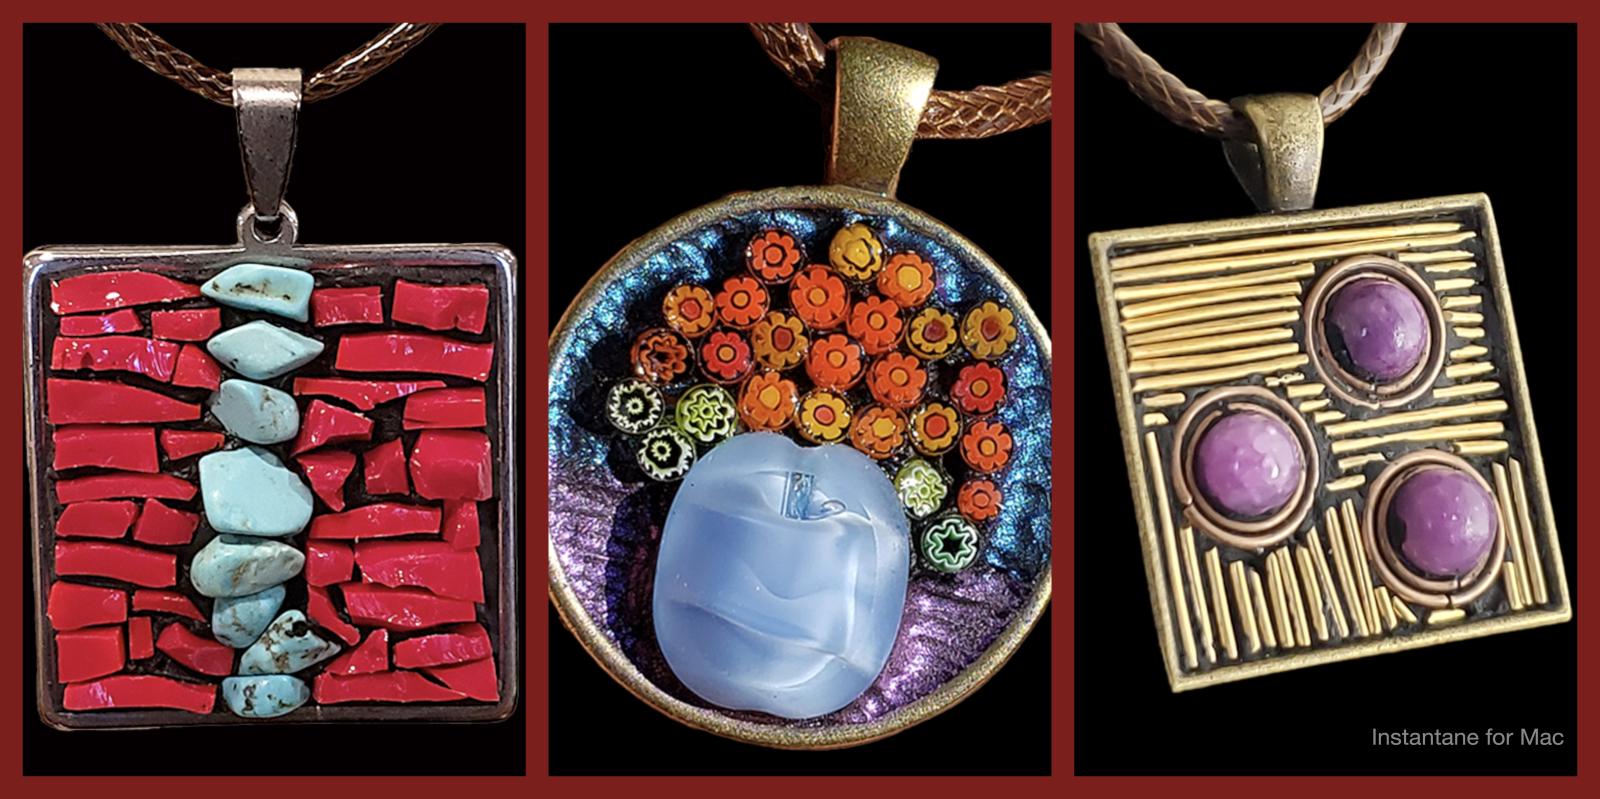 3 images of mosaic pendants